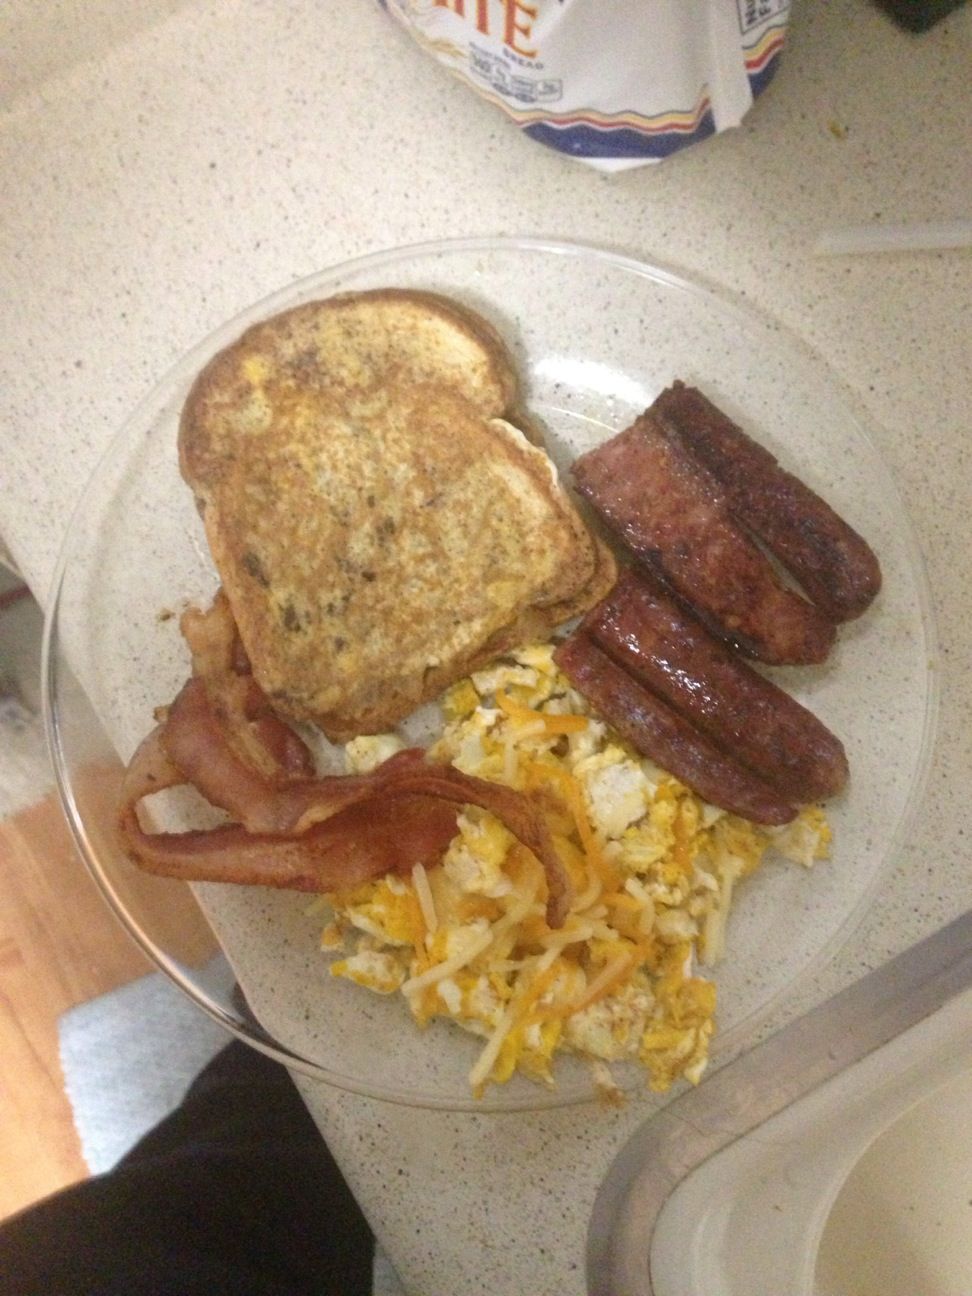 A real thugs breakfast...